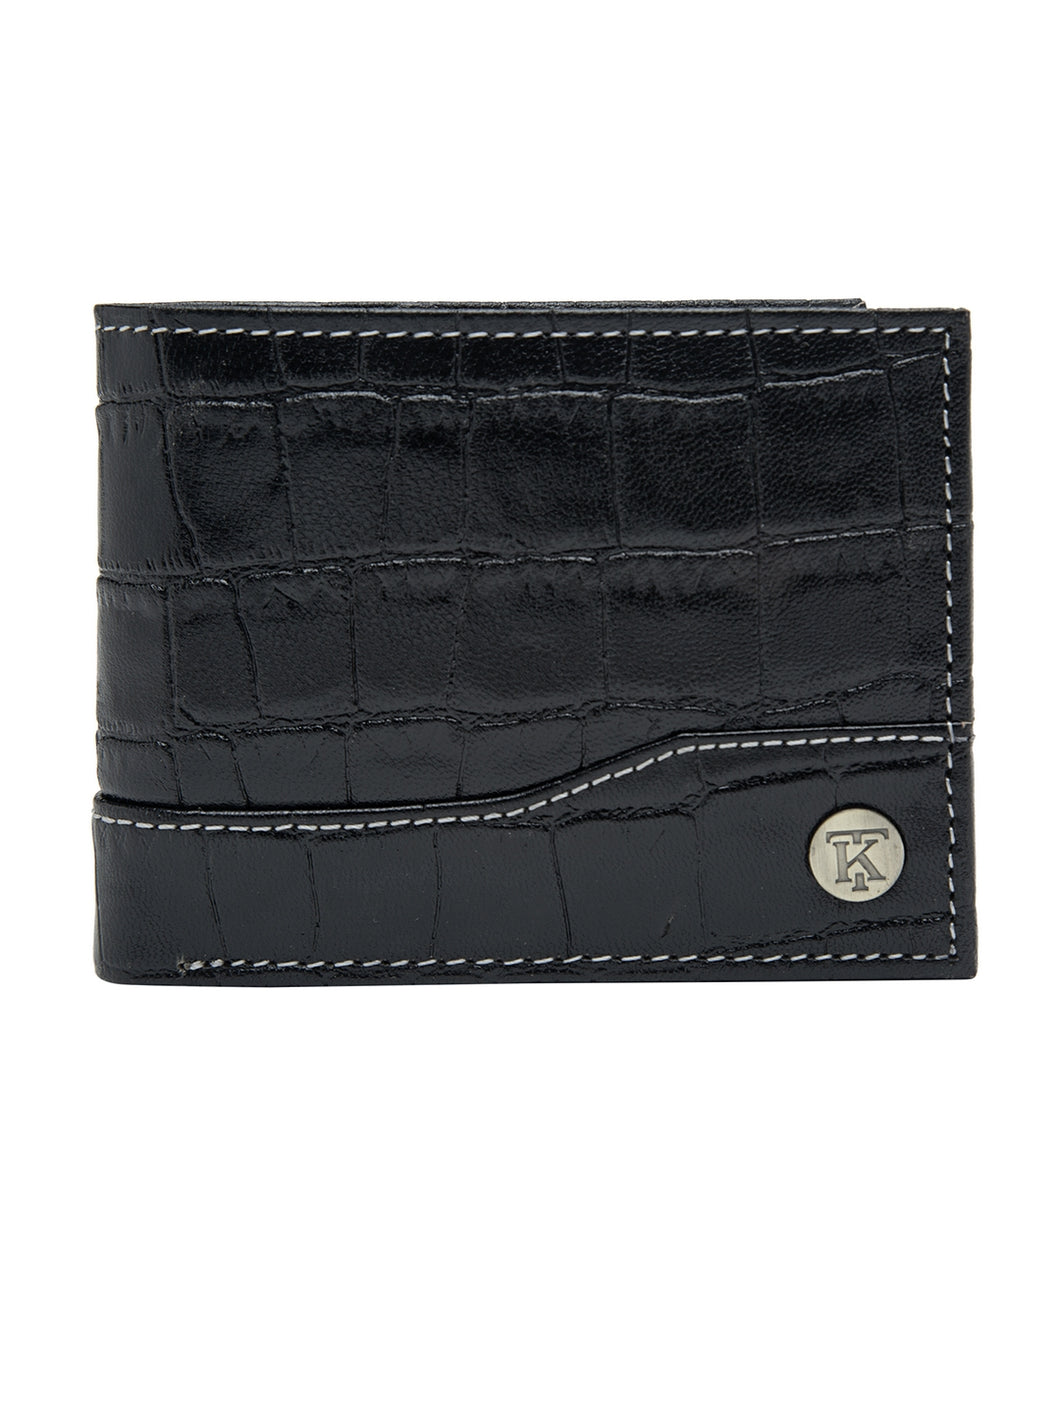 Teakwood Unisex Genuine Leather Black Bi Fold RFID Solid Wallet with Stitch Embroidery||Textured Black color 100% Genuine Leather Men's Wallet||Unisex Leather Bi Fold Wallet